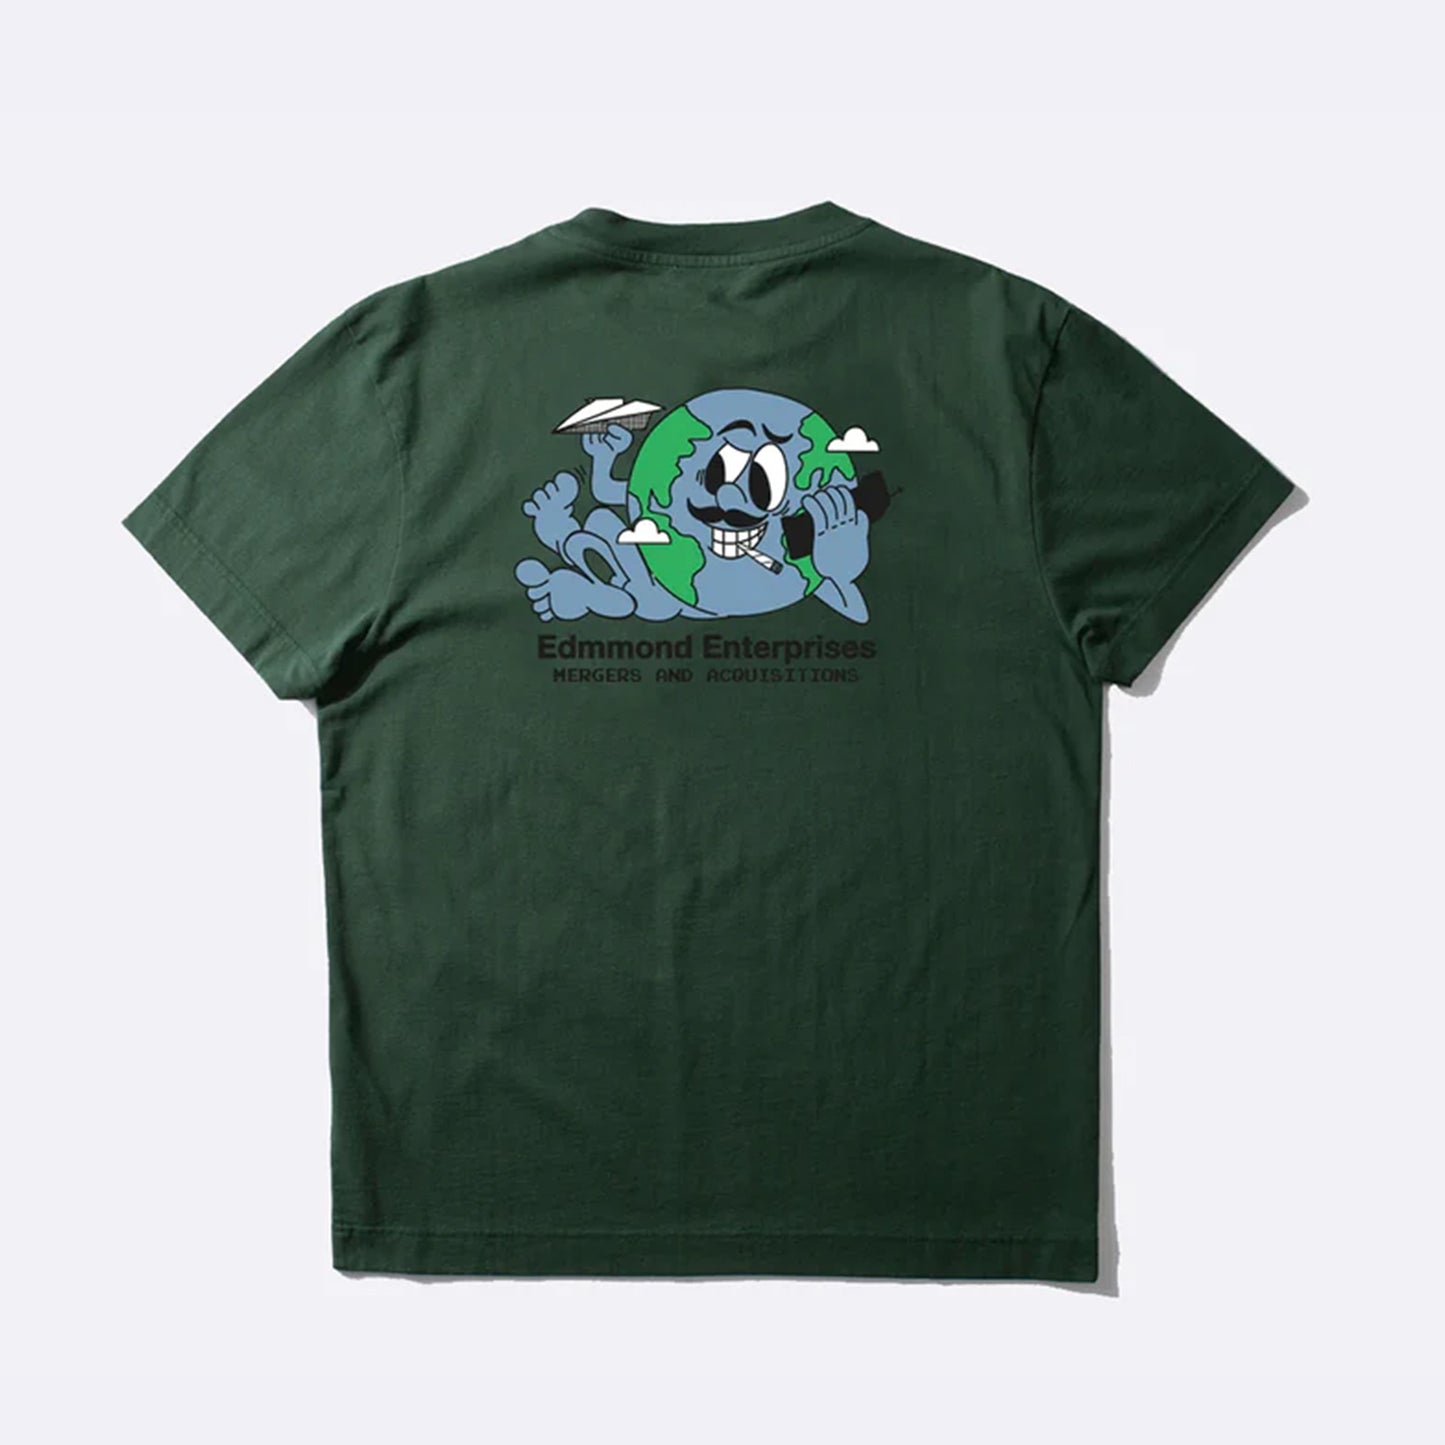 Edmmond Studios Enterprises T-Shirt